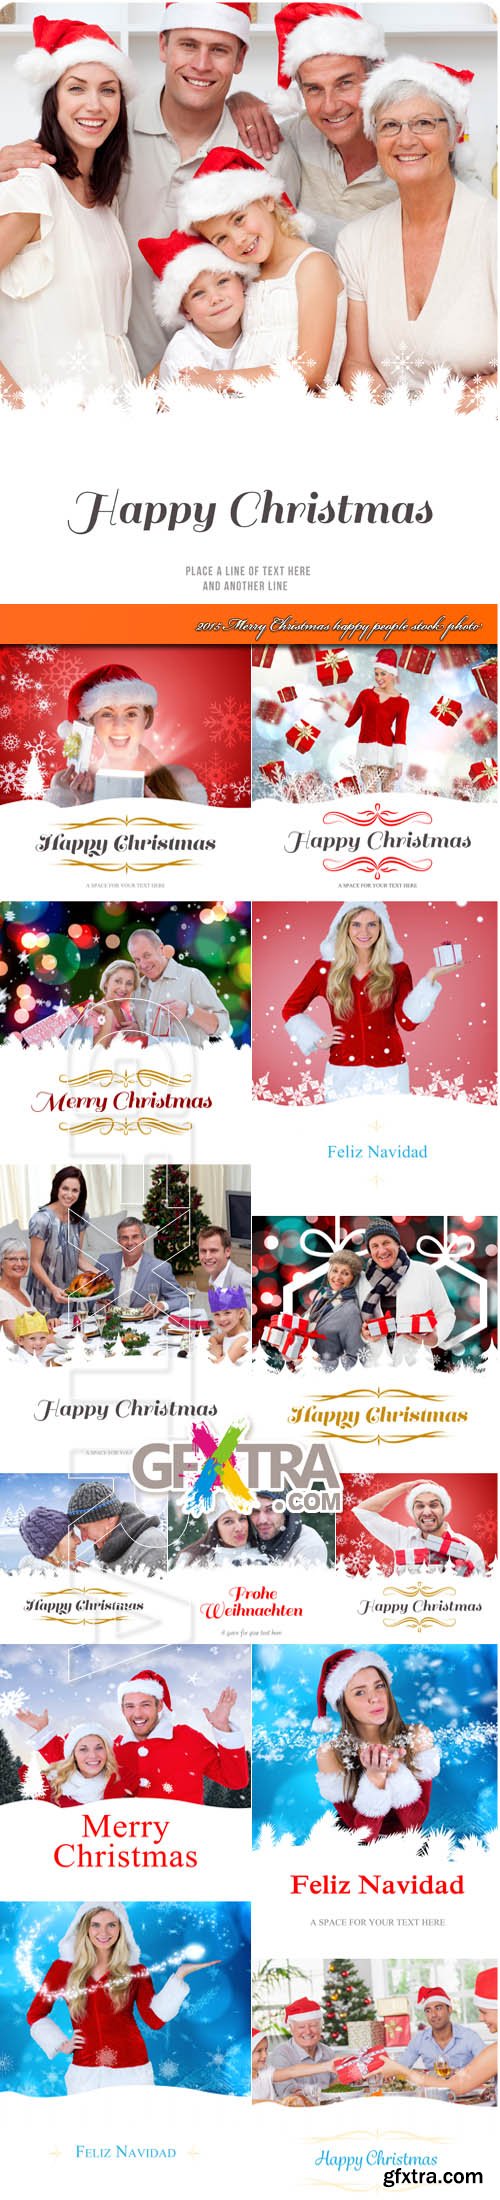 2015 Merry Christmas happy people stock photo